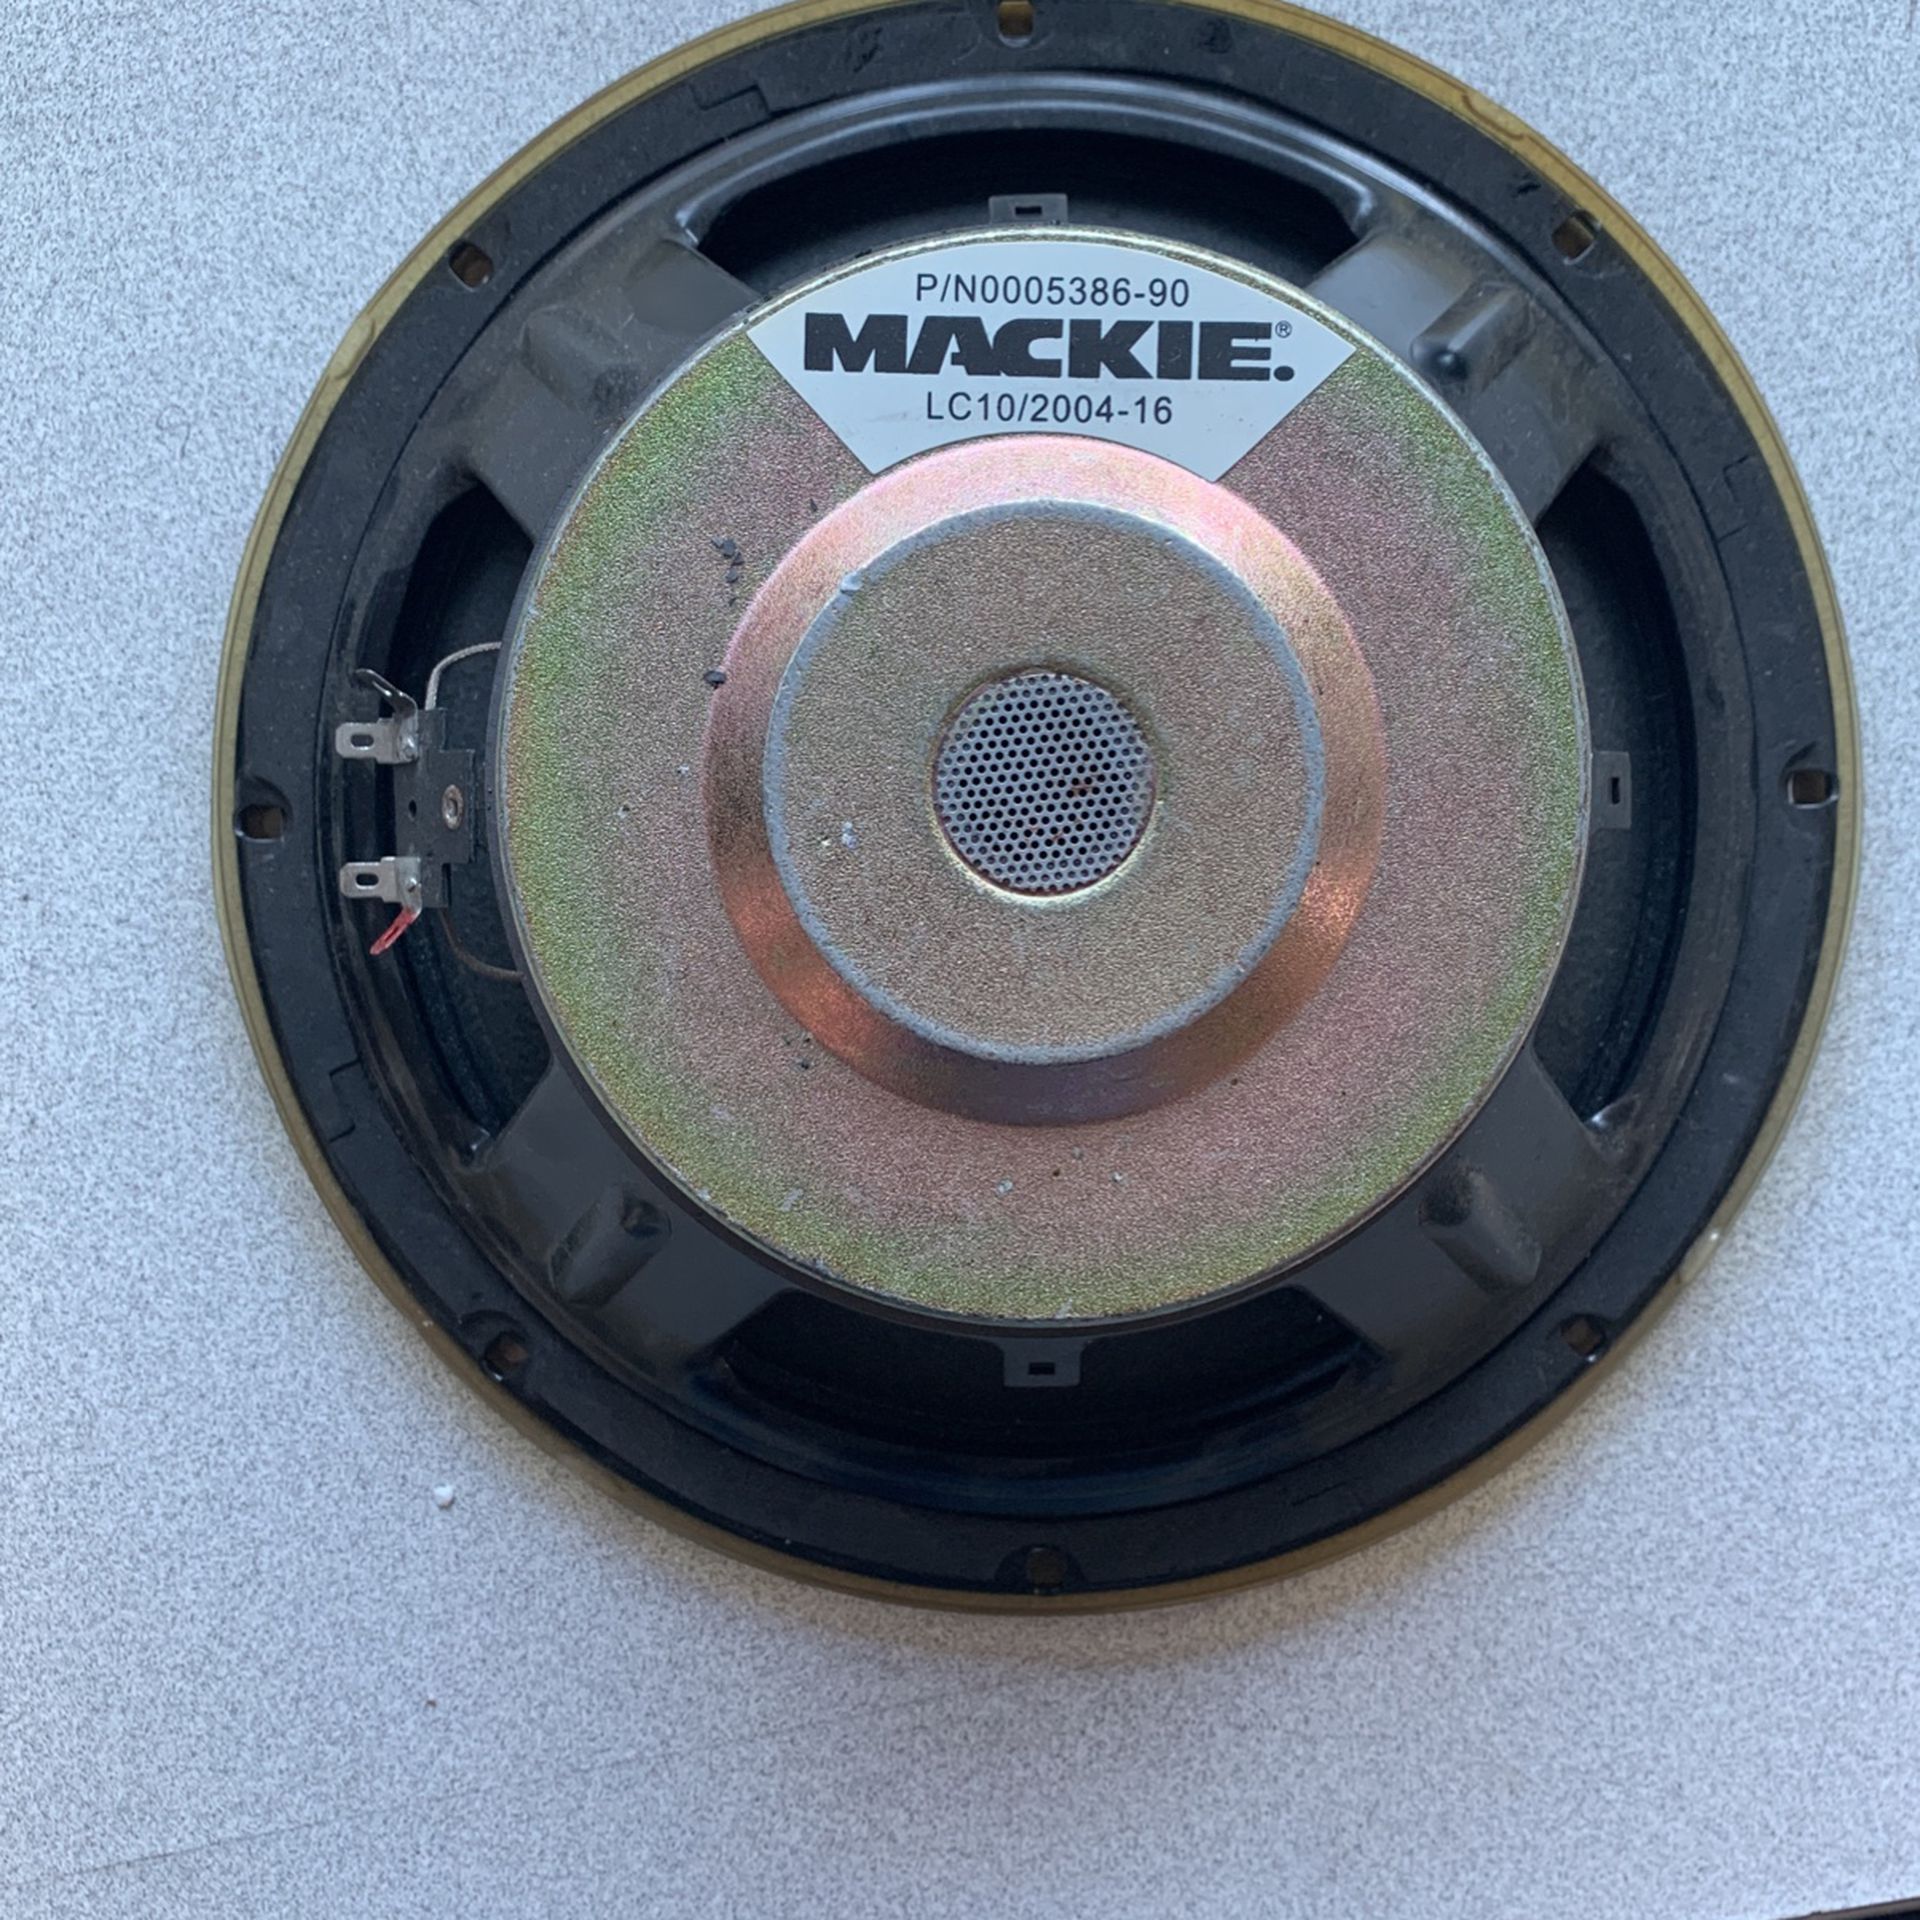 Mackie SRM-350 10” Subwoofer - New